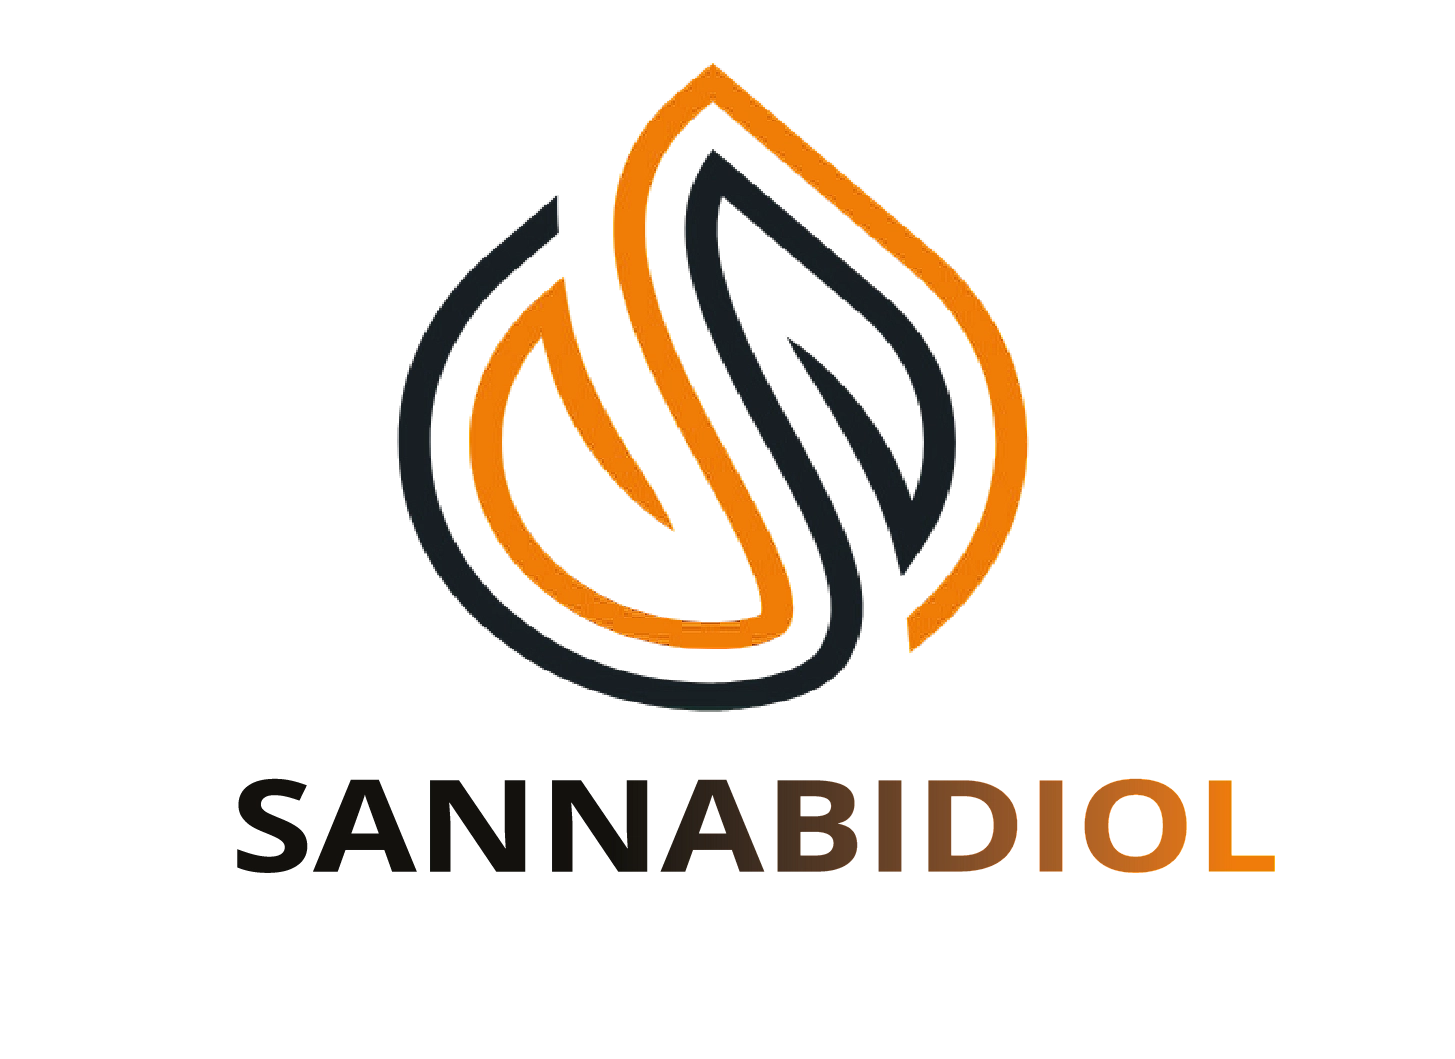 Sannabidiol